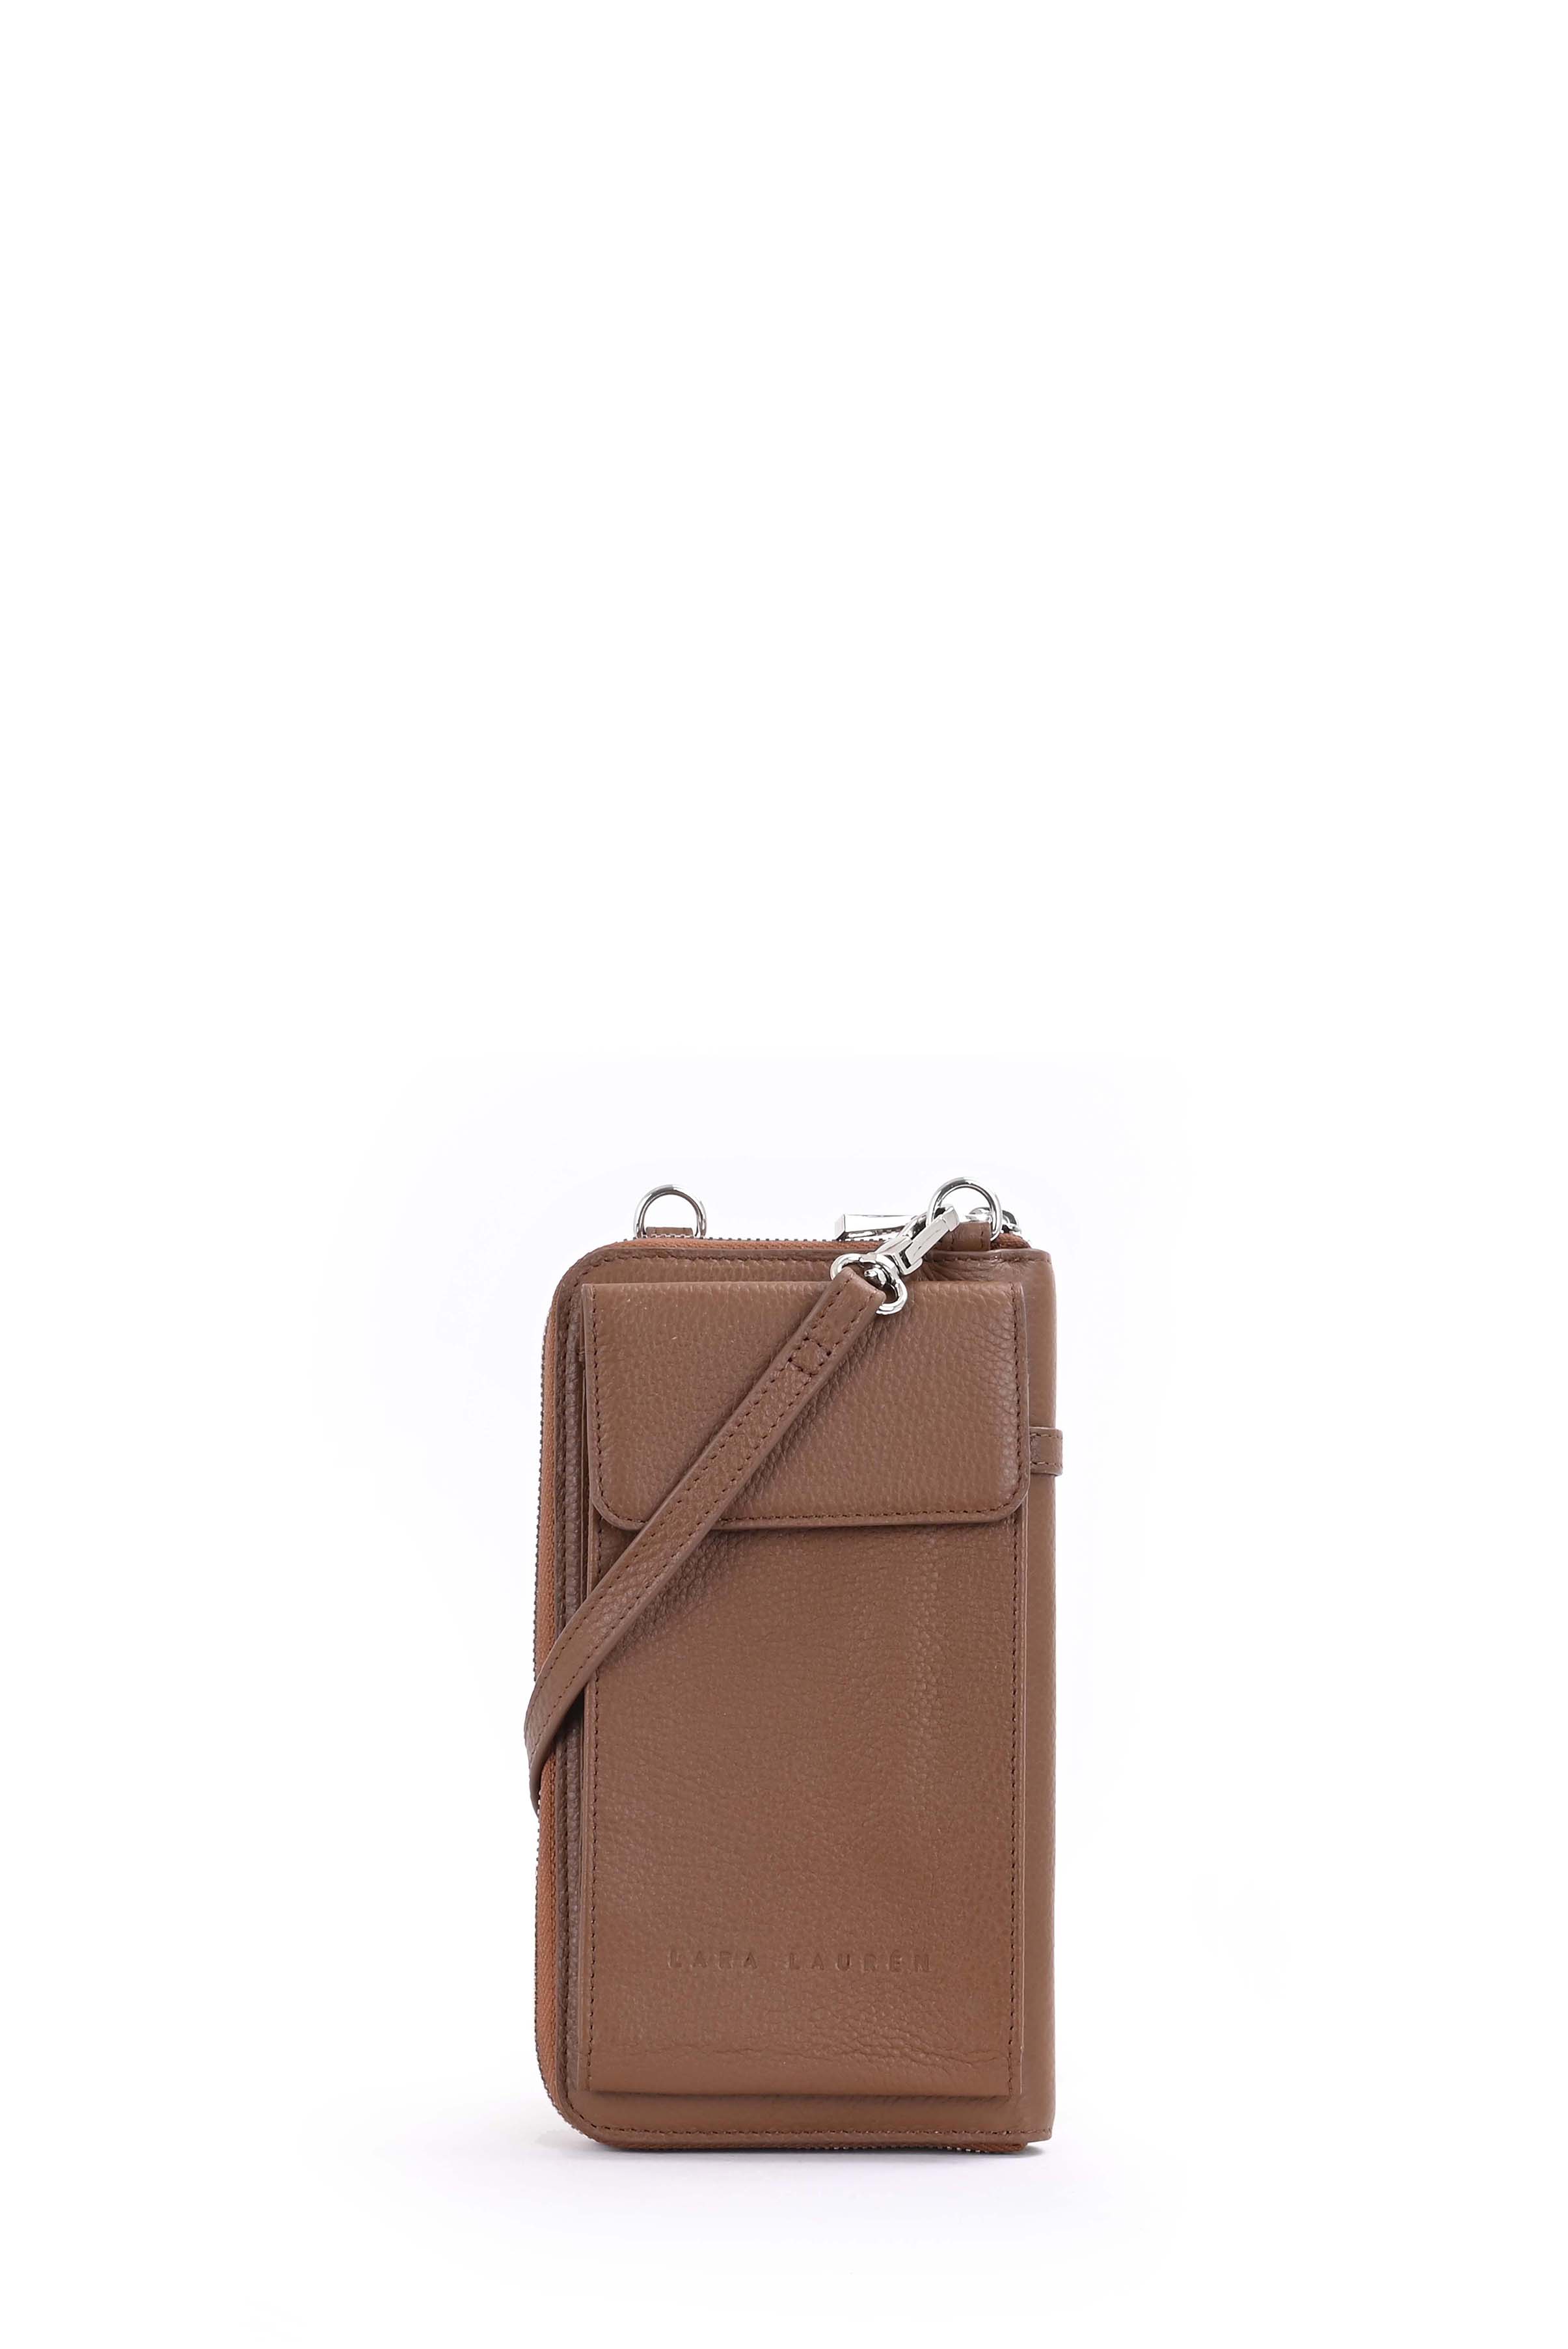 City Wallet A Mobilebag, cognac